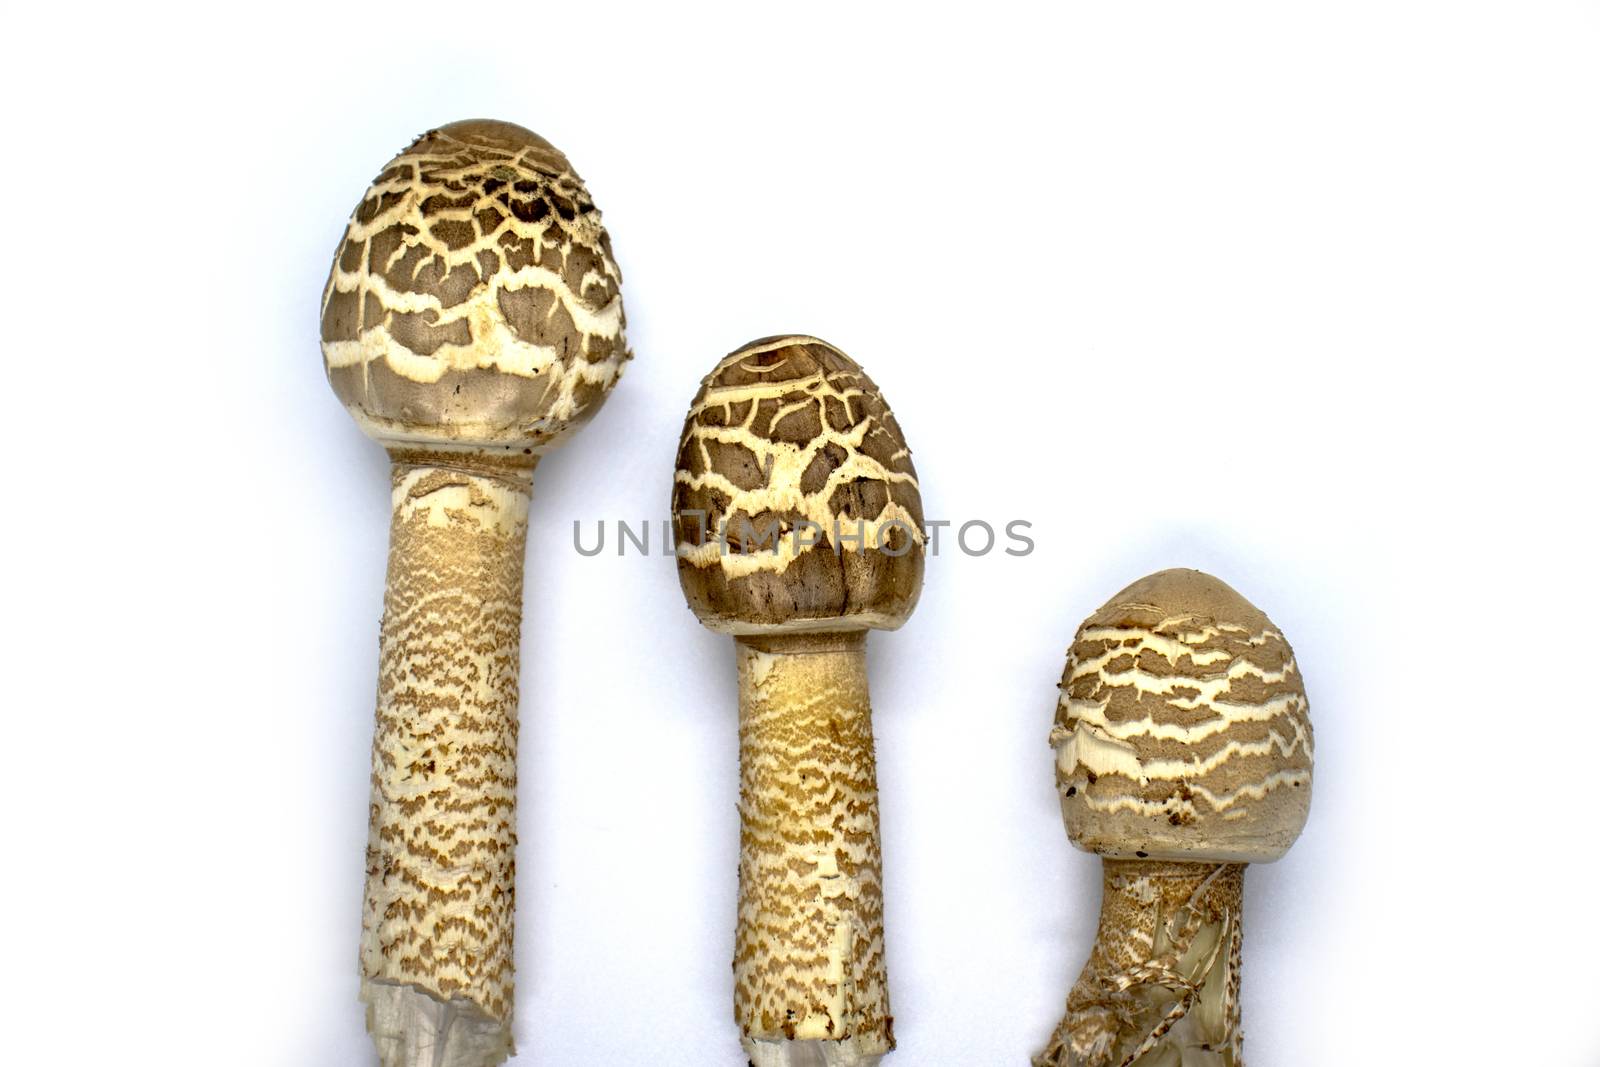 parasol mushroom on white background close up Macrolepiota procera by Andreajk3